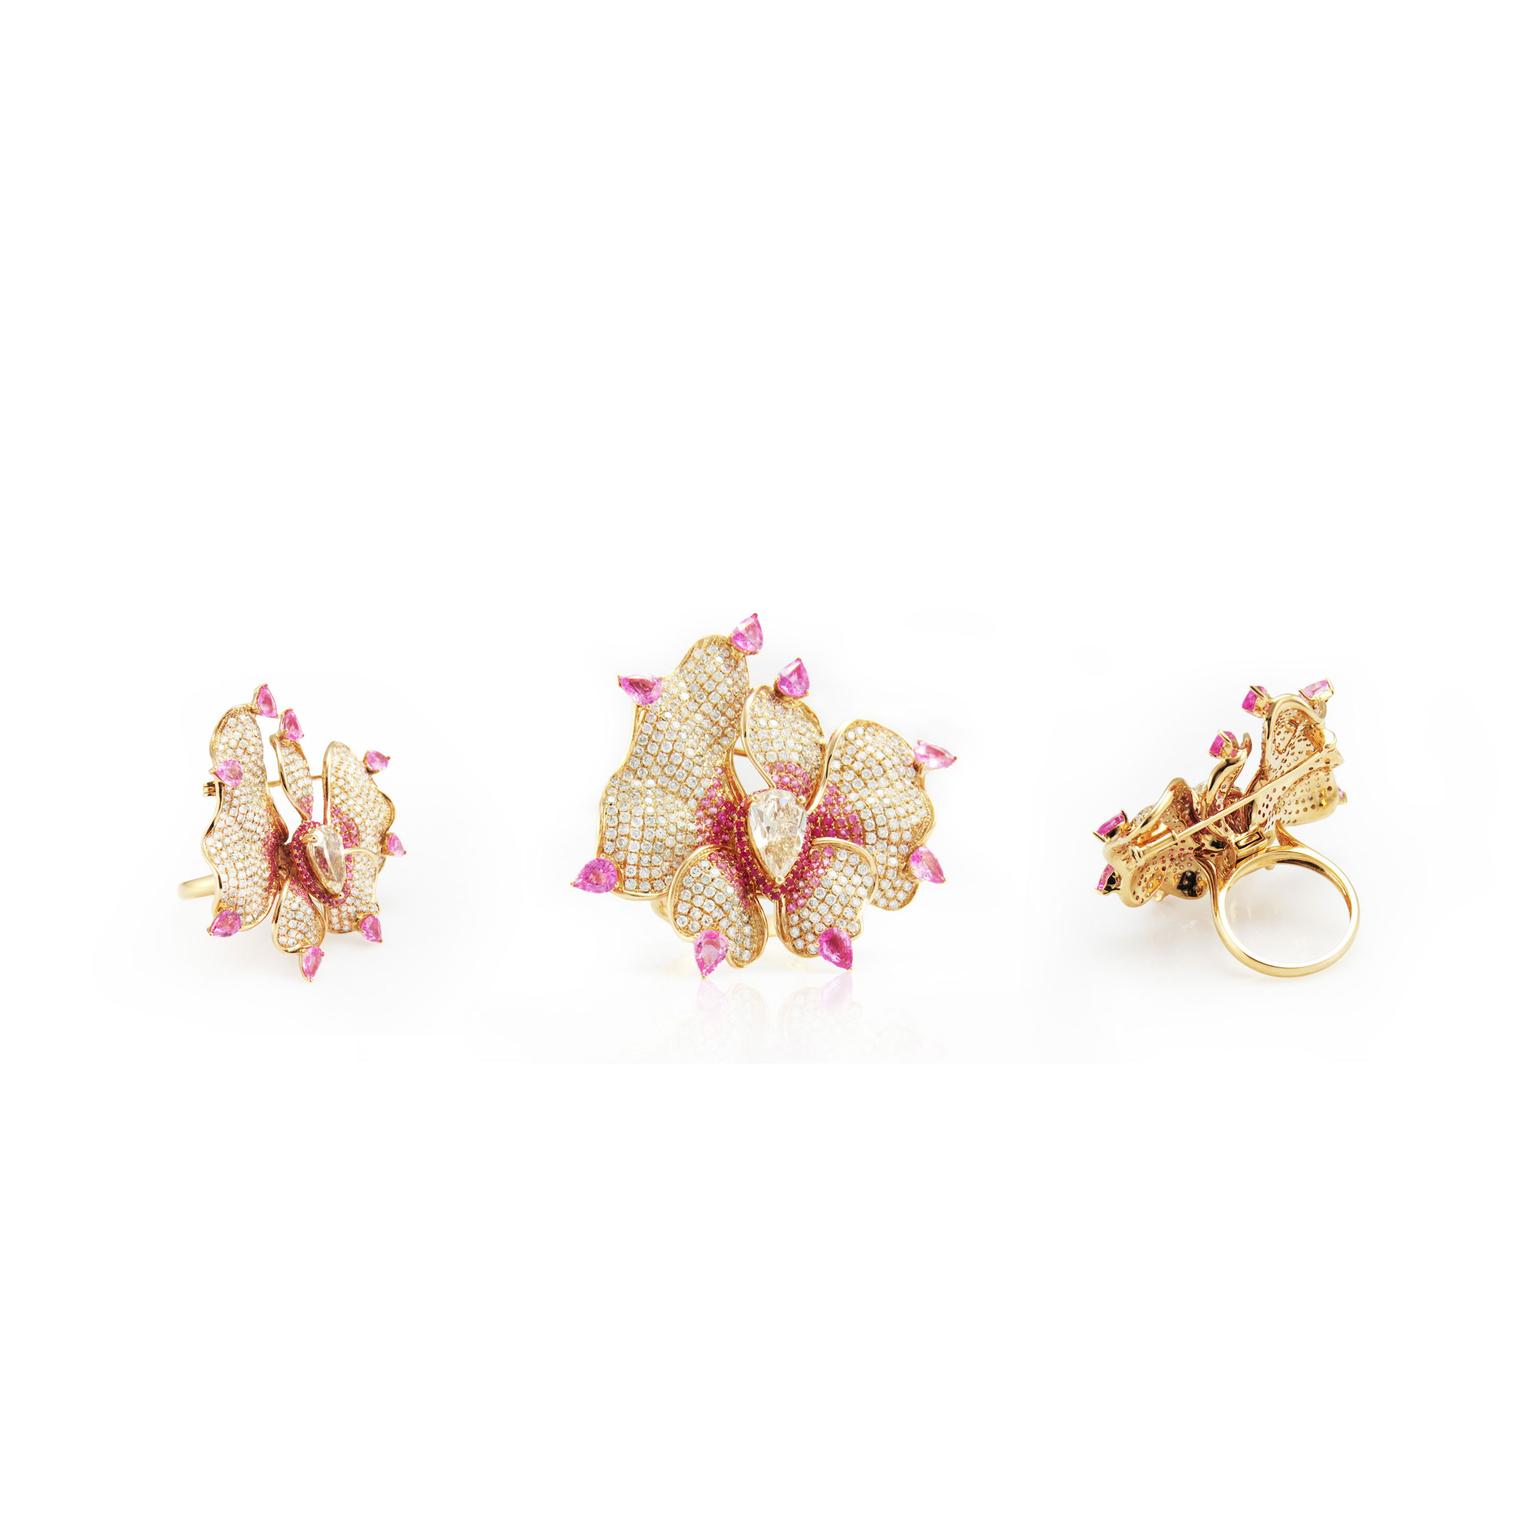 Fei Liu jewellery Orchid Flower ring brooch group